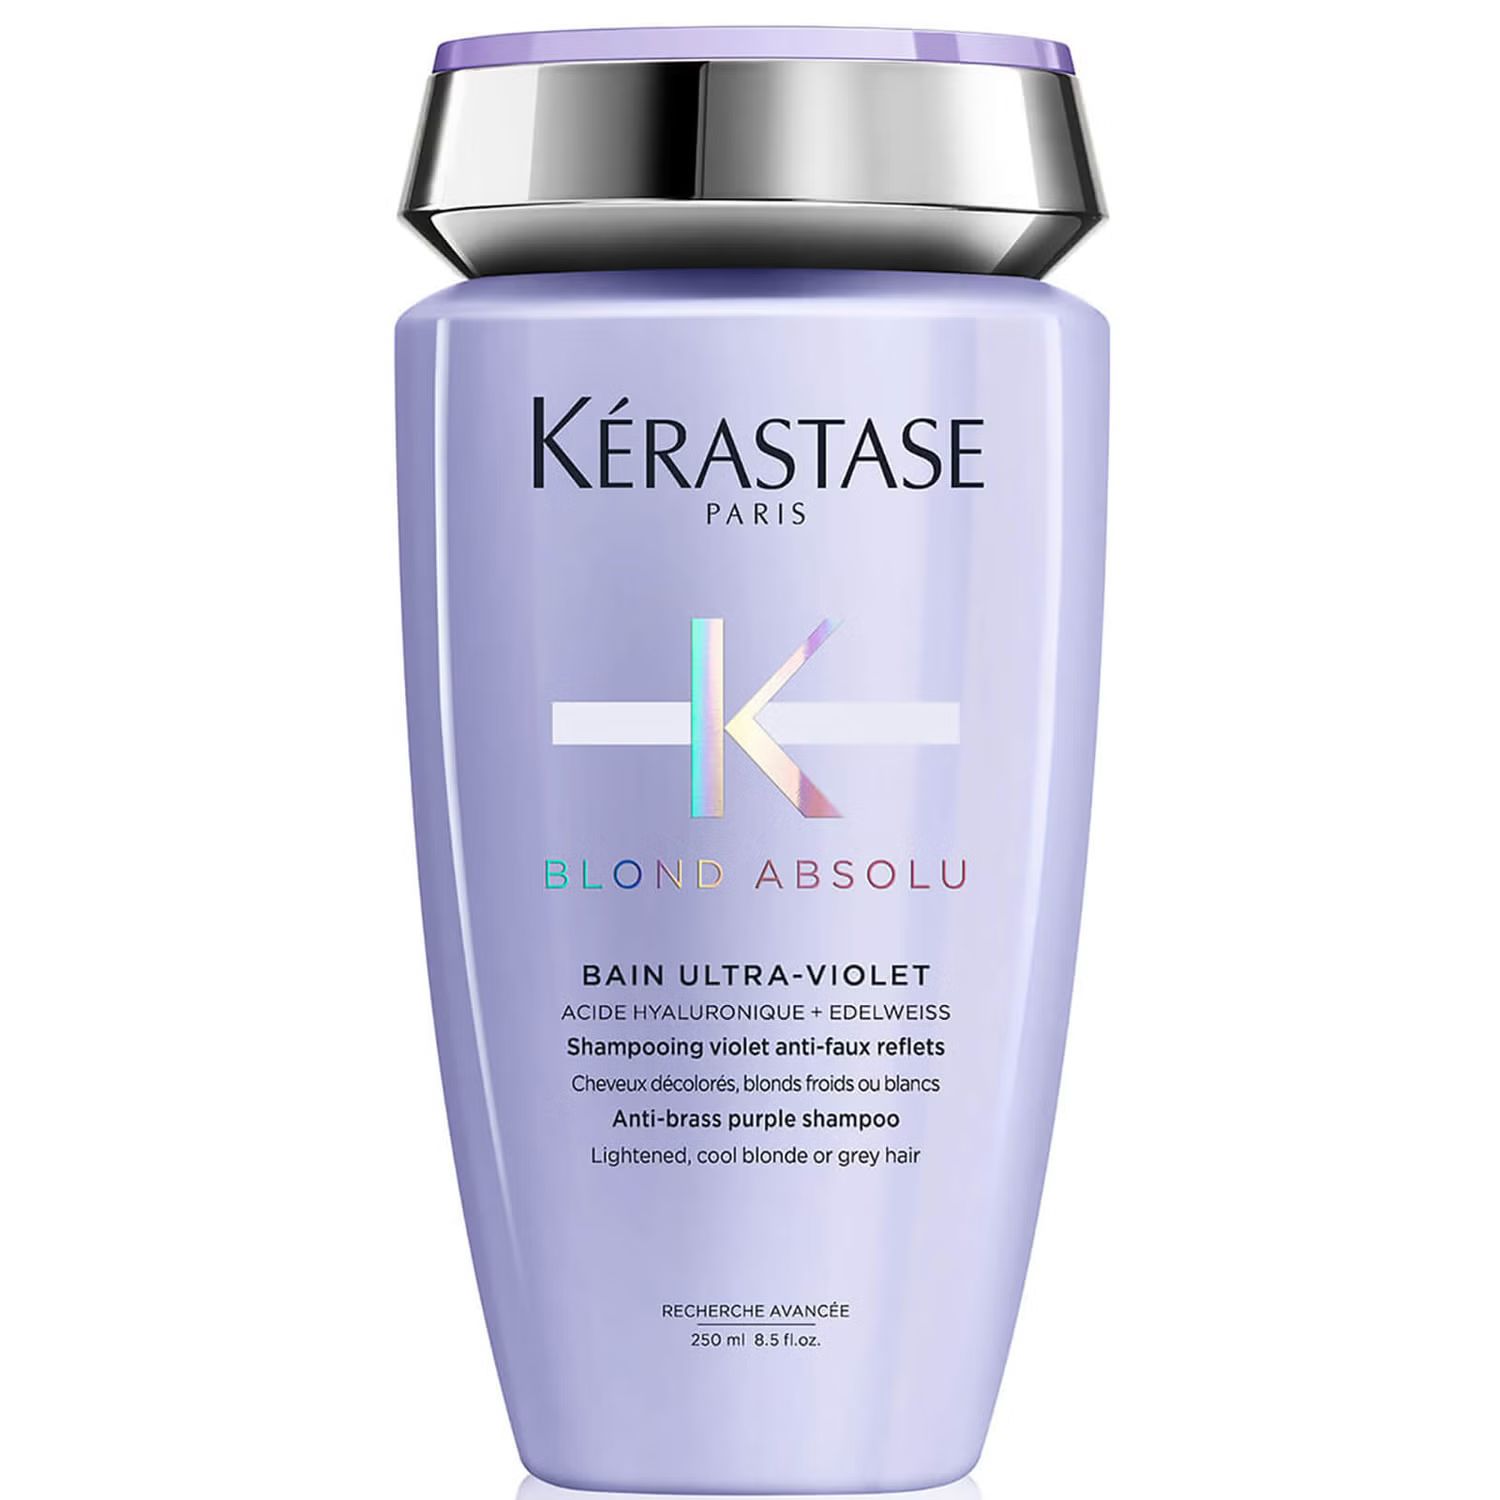 Kérastase Blond Absolu Bain Ultra Violet Shampoo 250ml | Look Fantastic (UK)